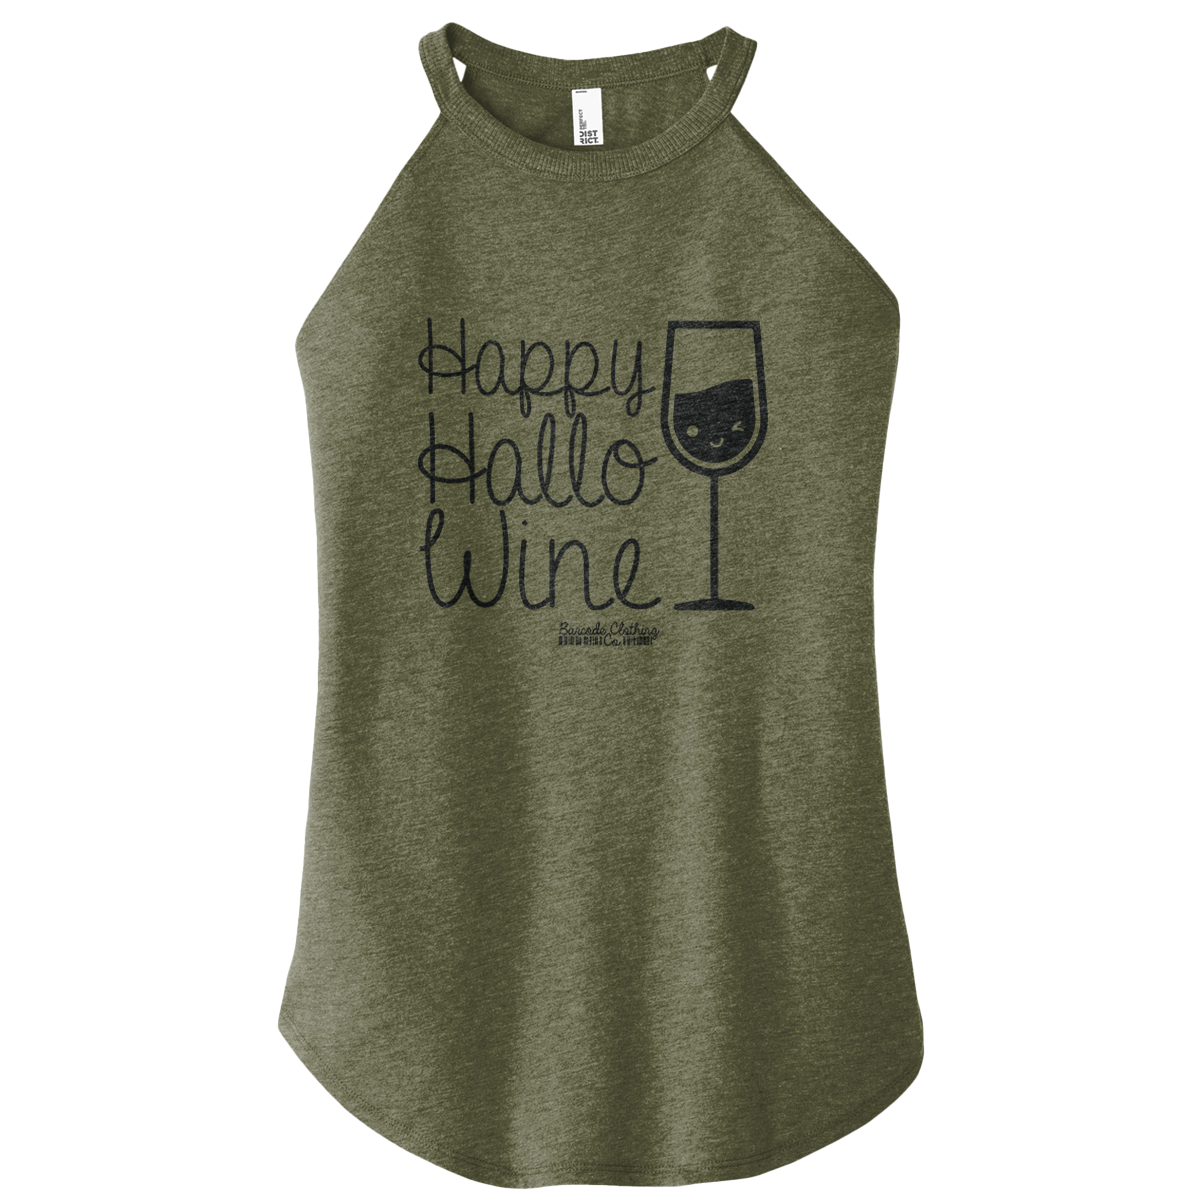 Happy Hallo-Wine Rocker Tank